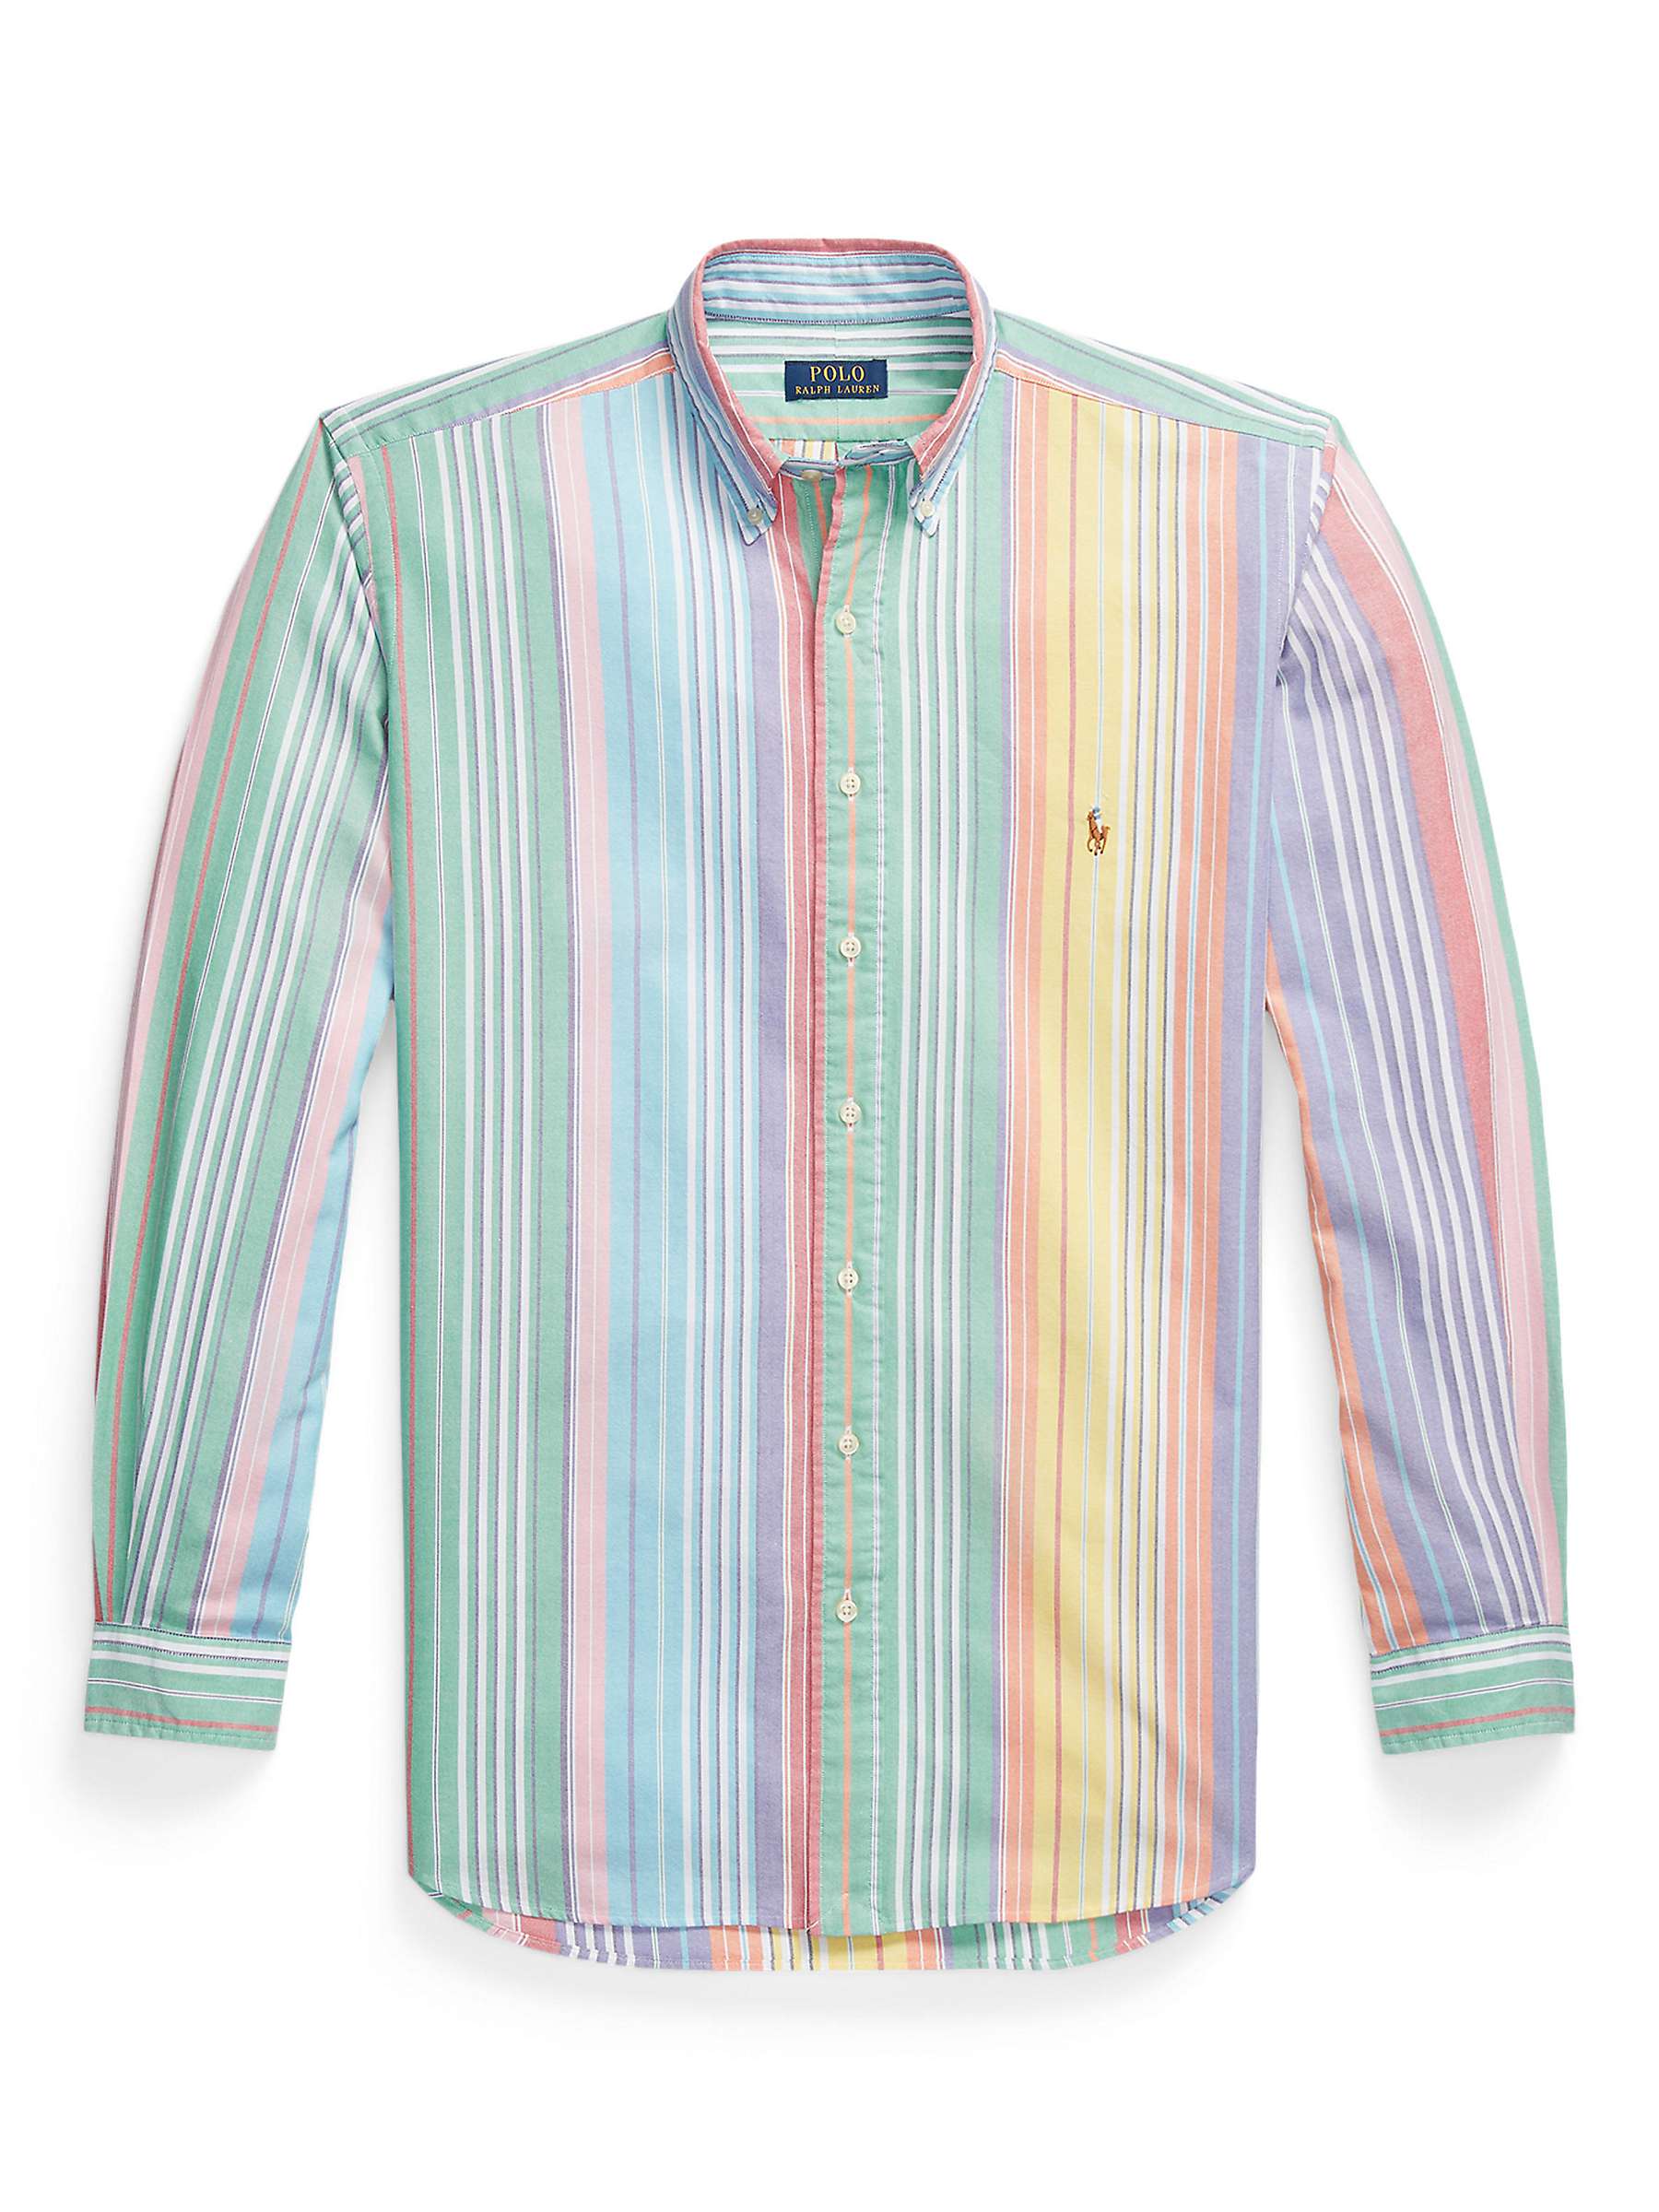 Buy Polo Ralph Lauren Big & Tall Striped Oxford Shirt, Multi Online at johnlewis.com